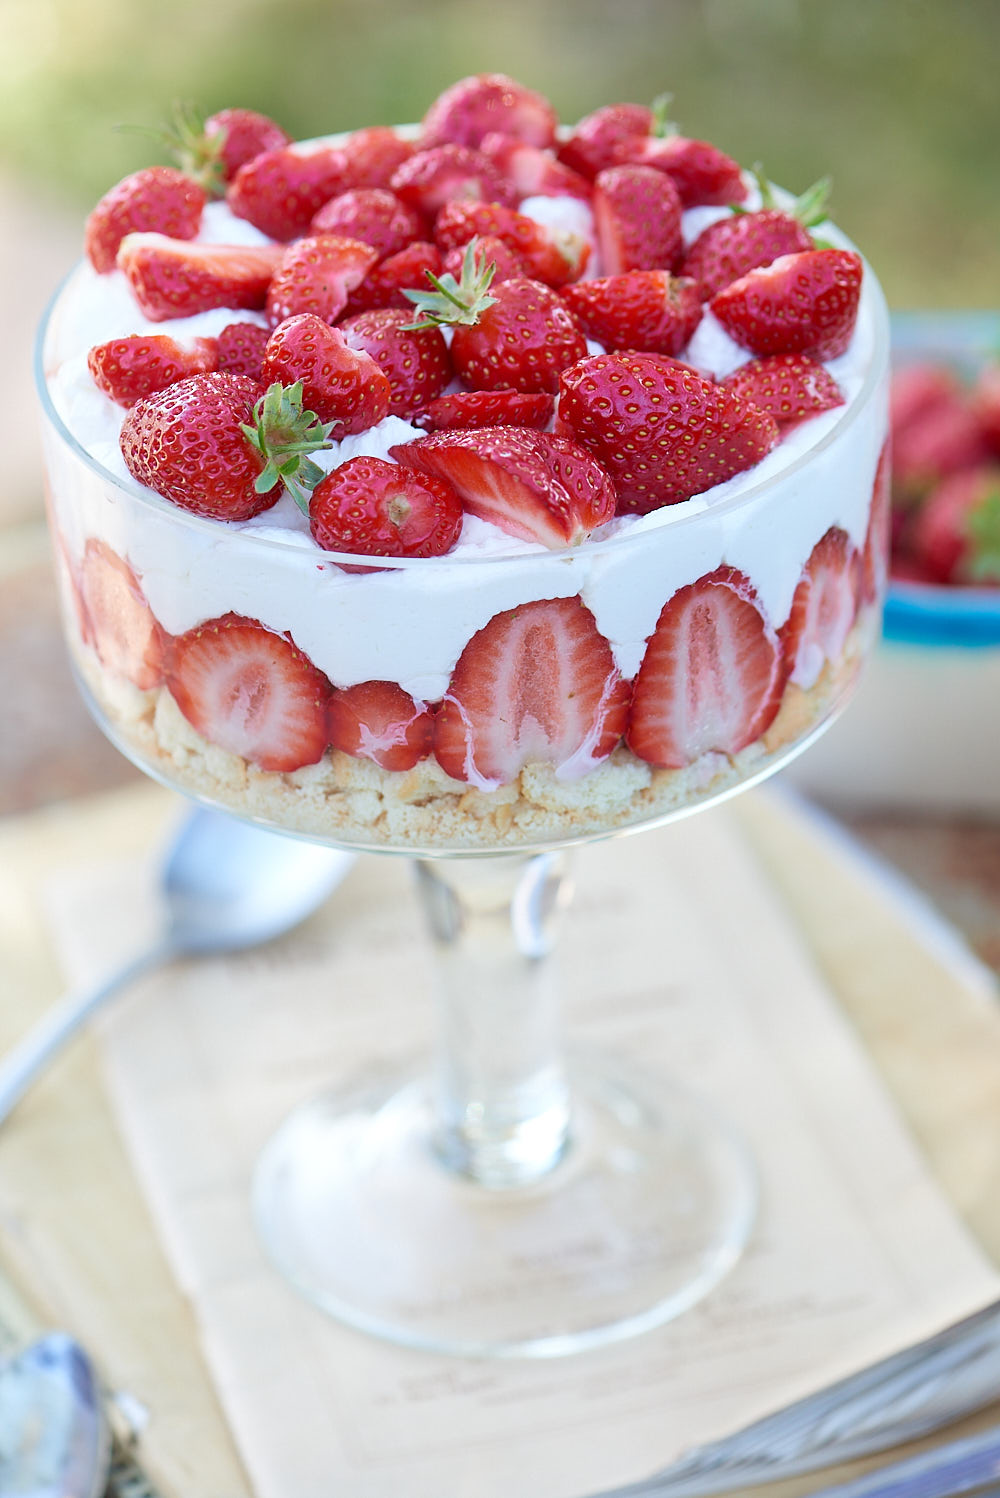 photo culinaire de fraisier express